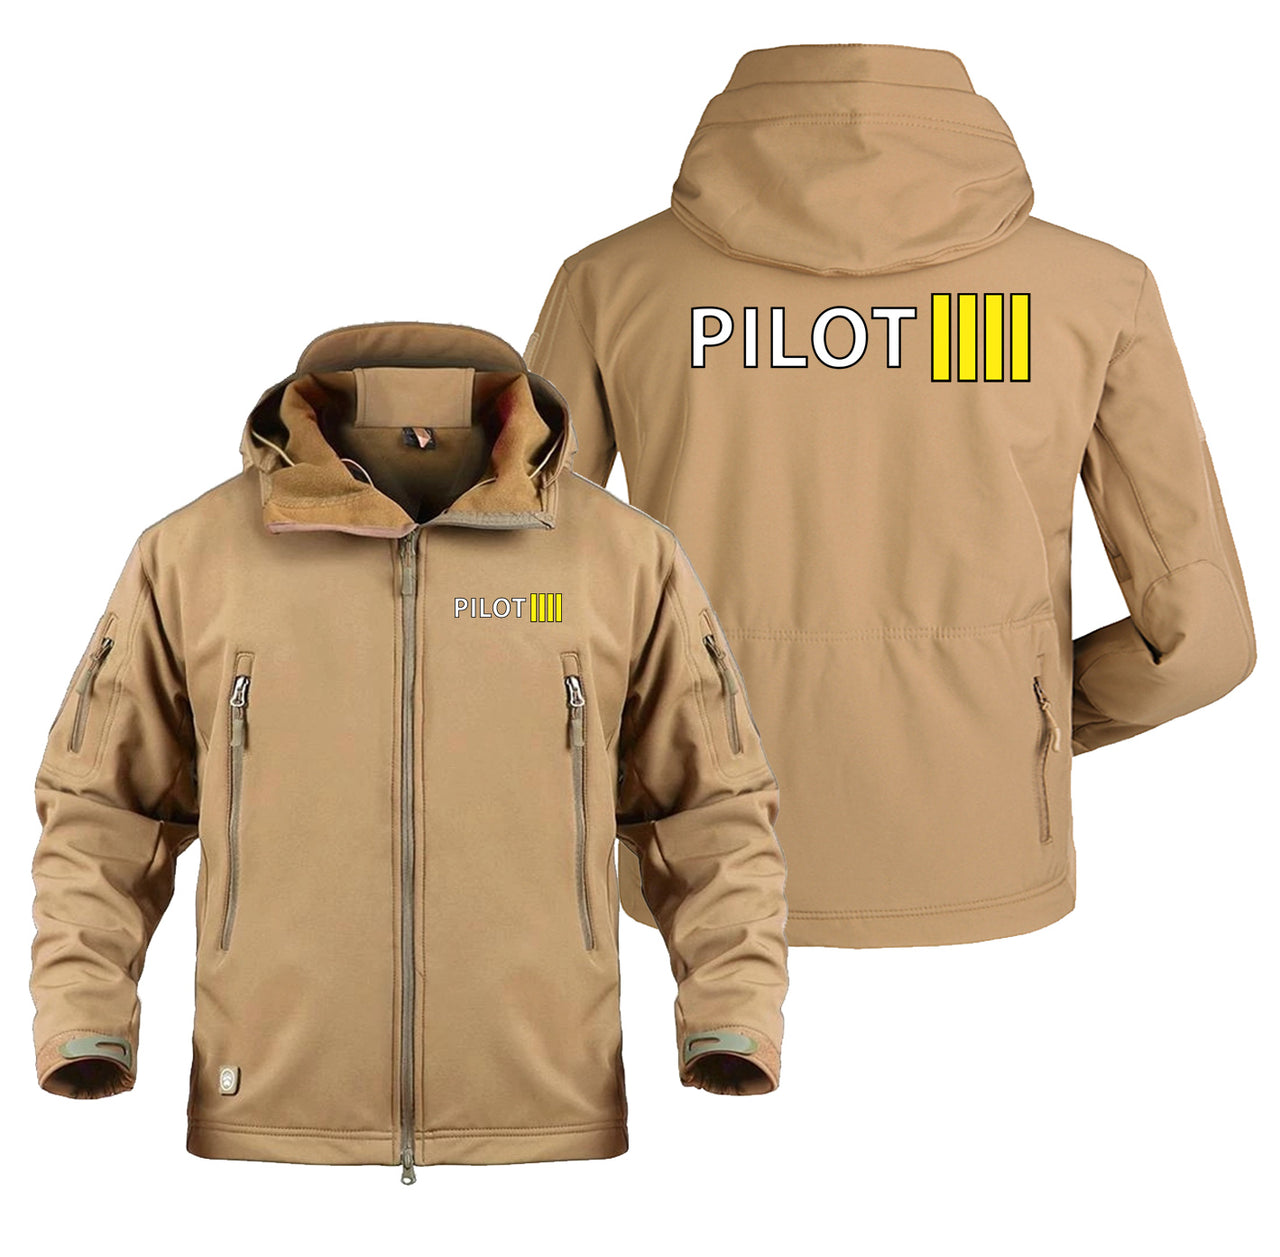 Pilot & Stripes (4 Lines) Designed Military Jackets (Customizable)